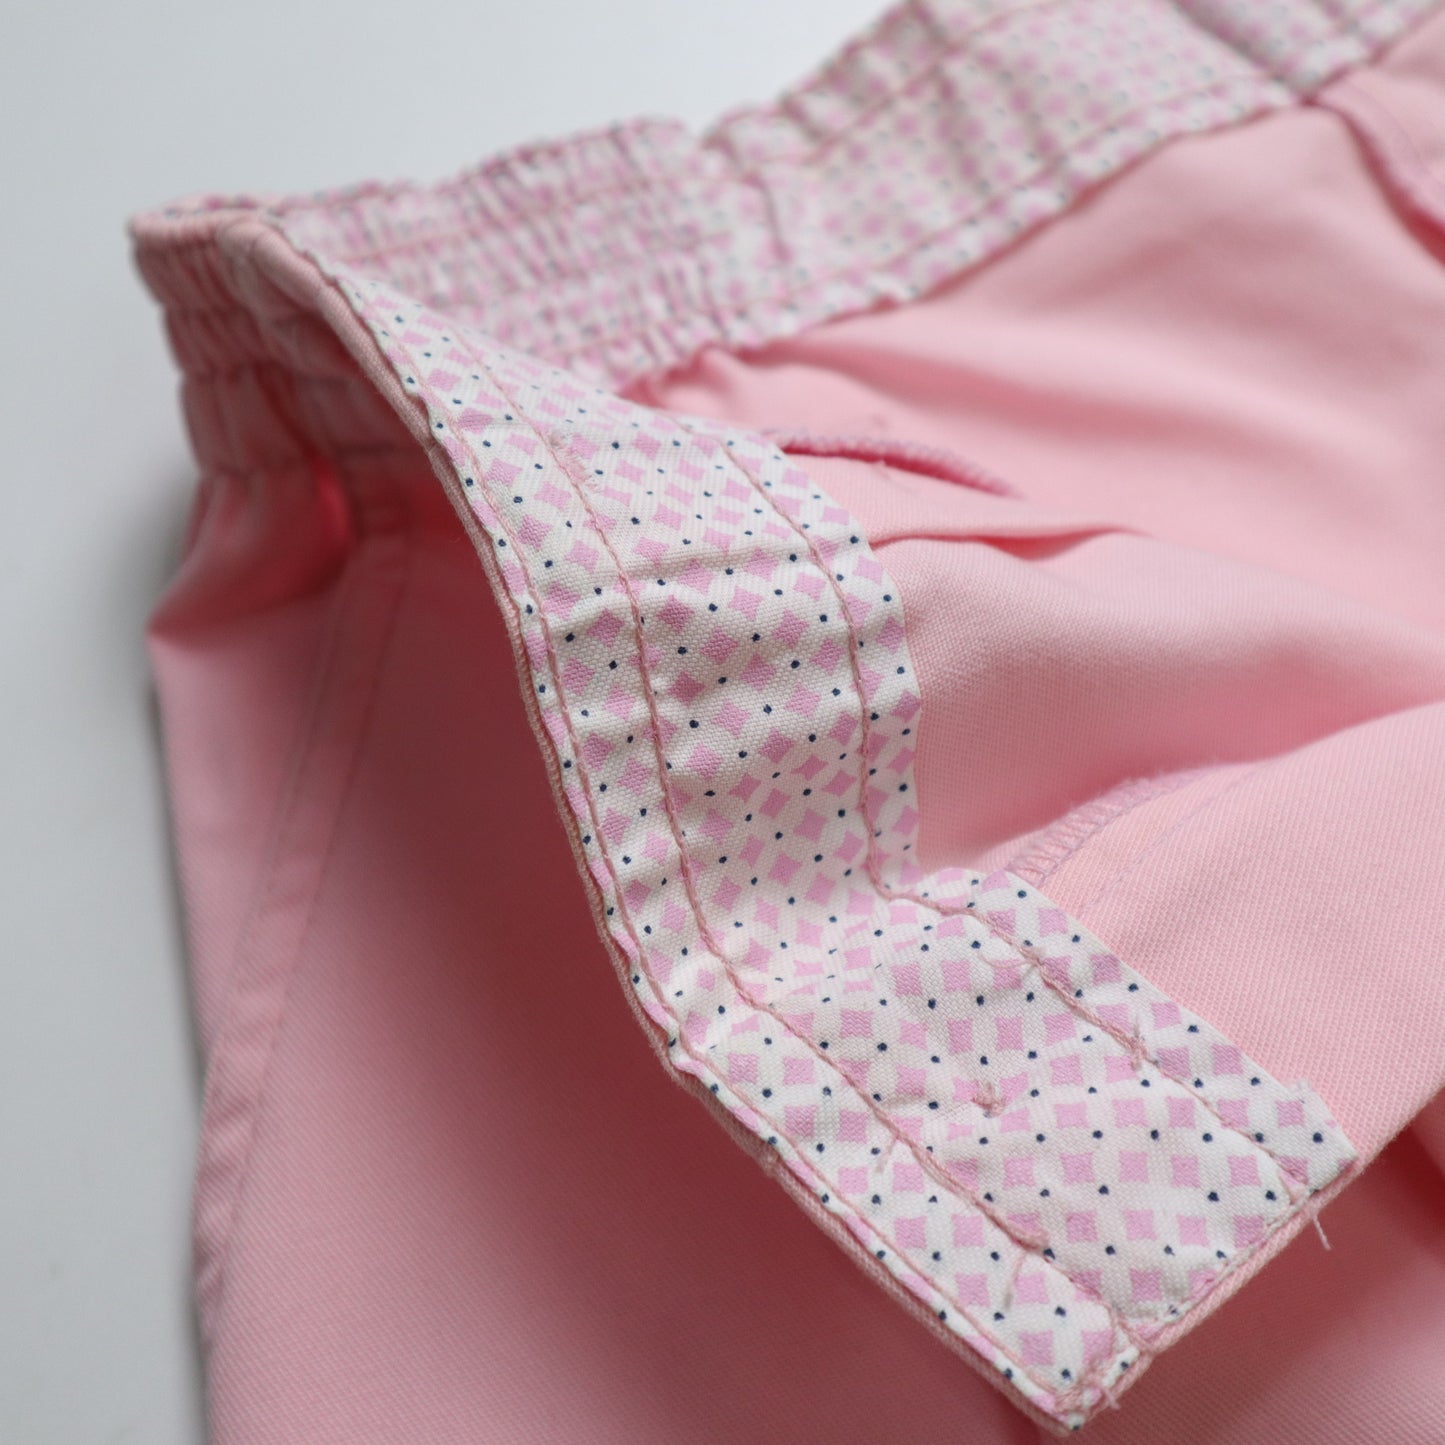 1980s Levi’s 美國製 粉色素面打摺短褲